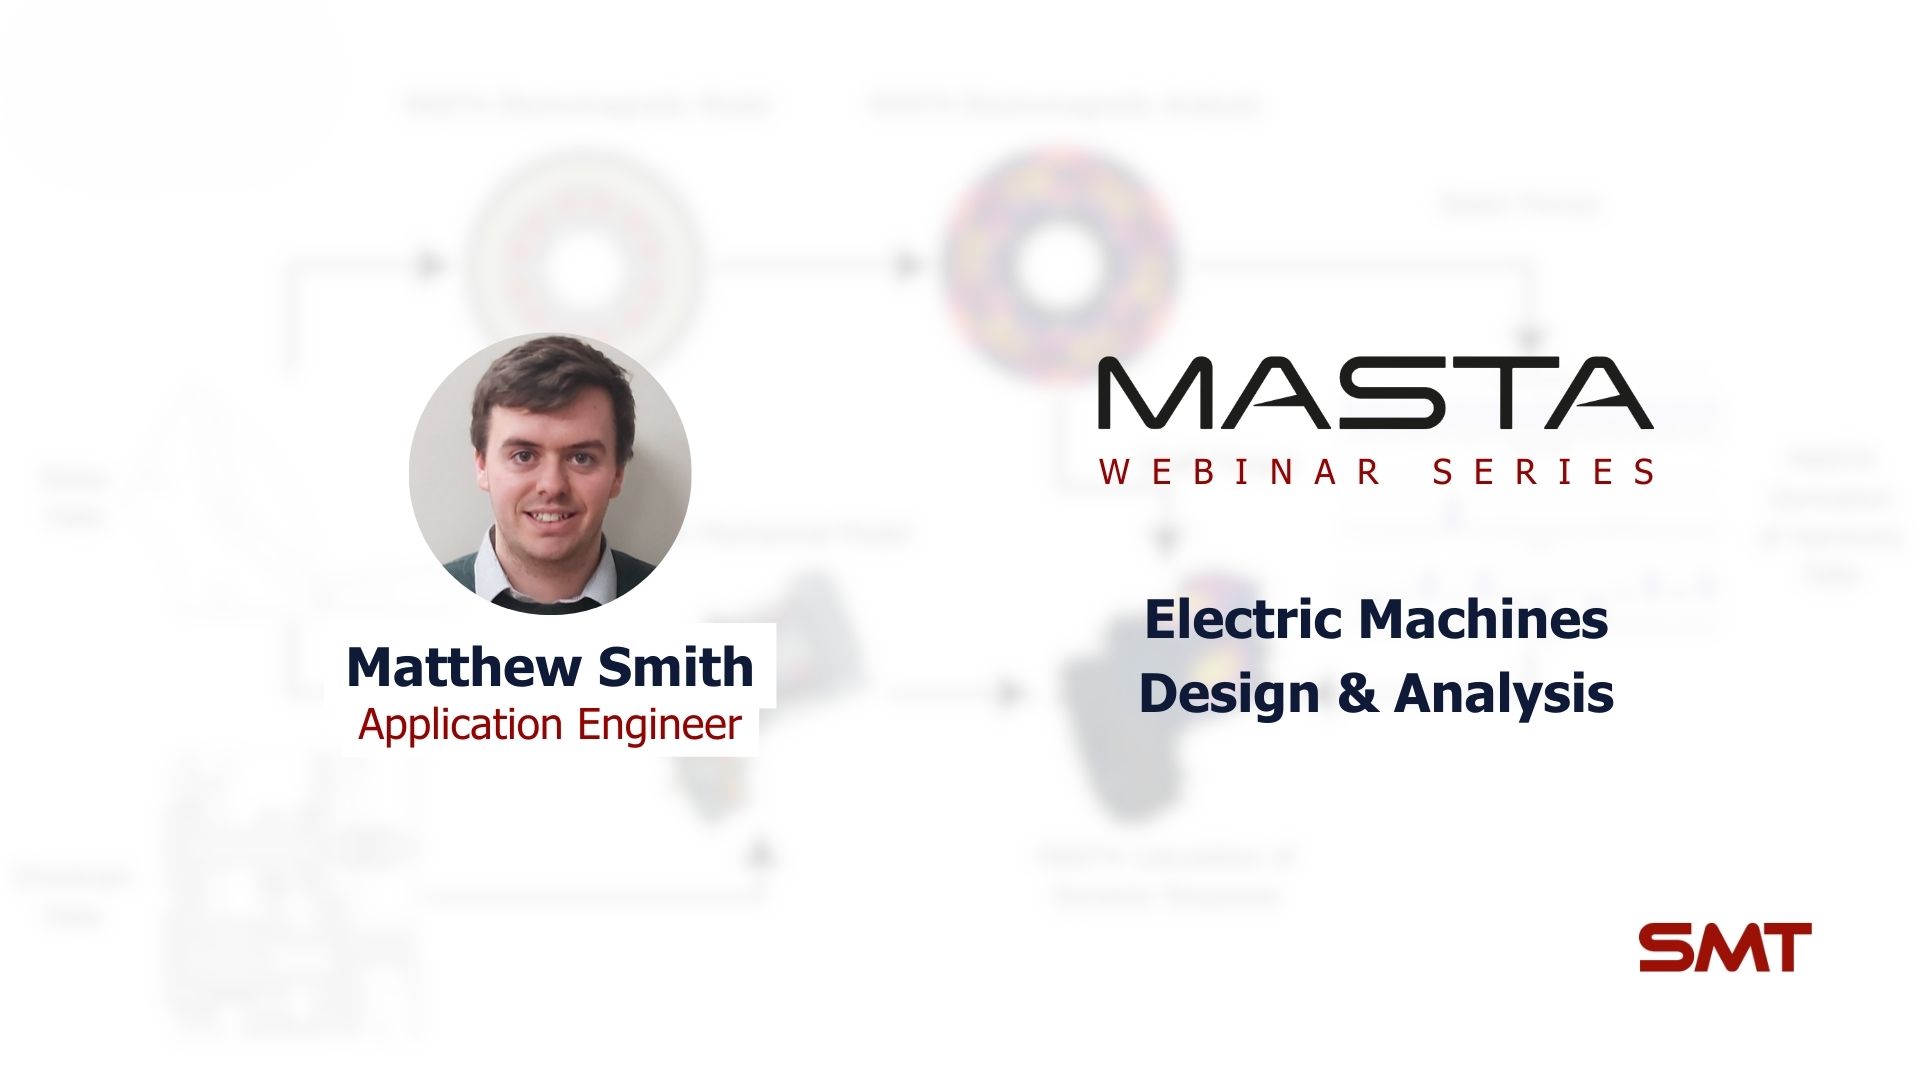 Matt Smith, Application Engineer at SMT 'Electric Machines Design and Analysis' webinar.